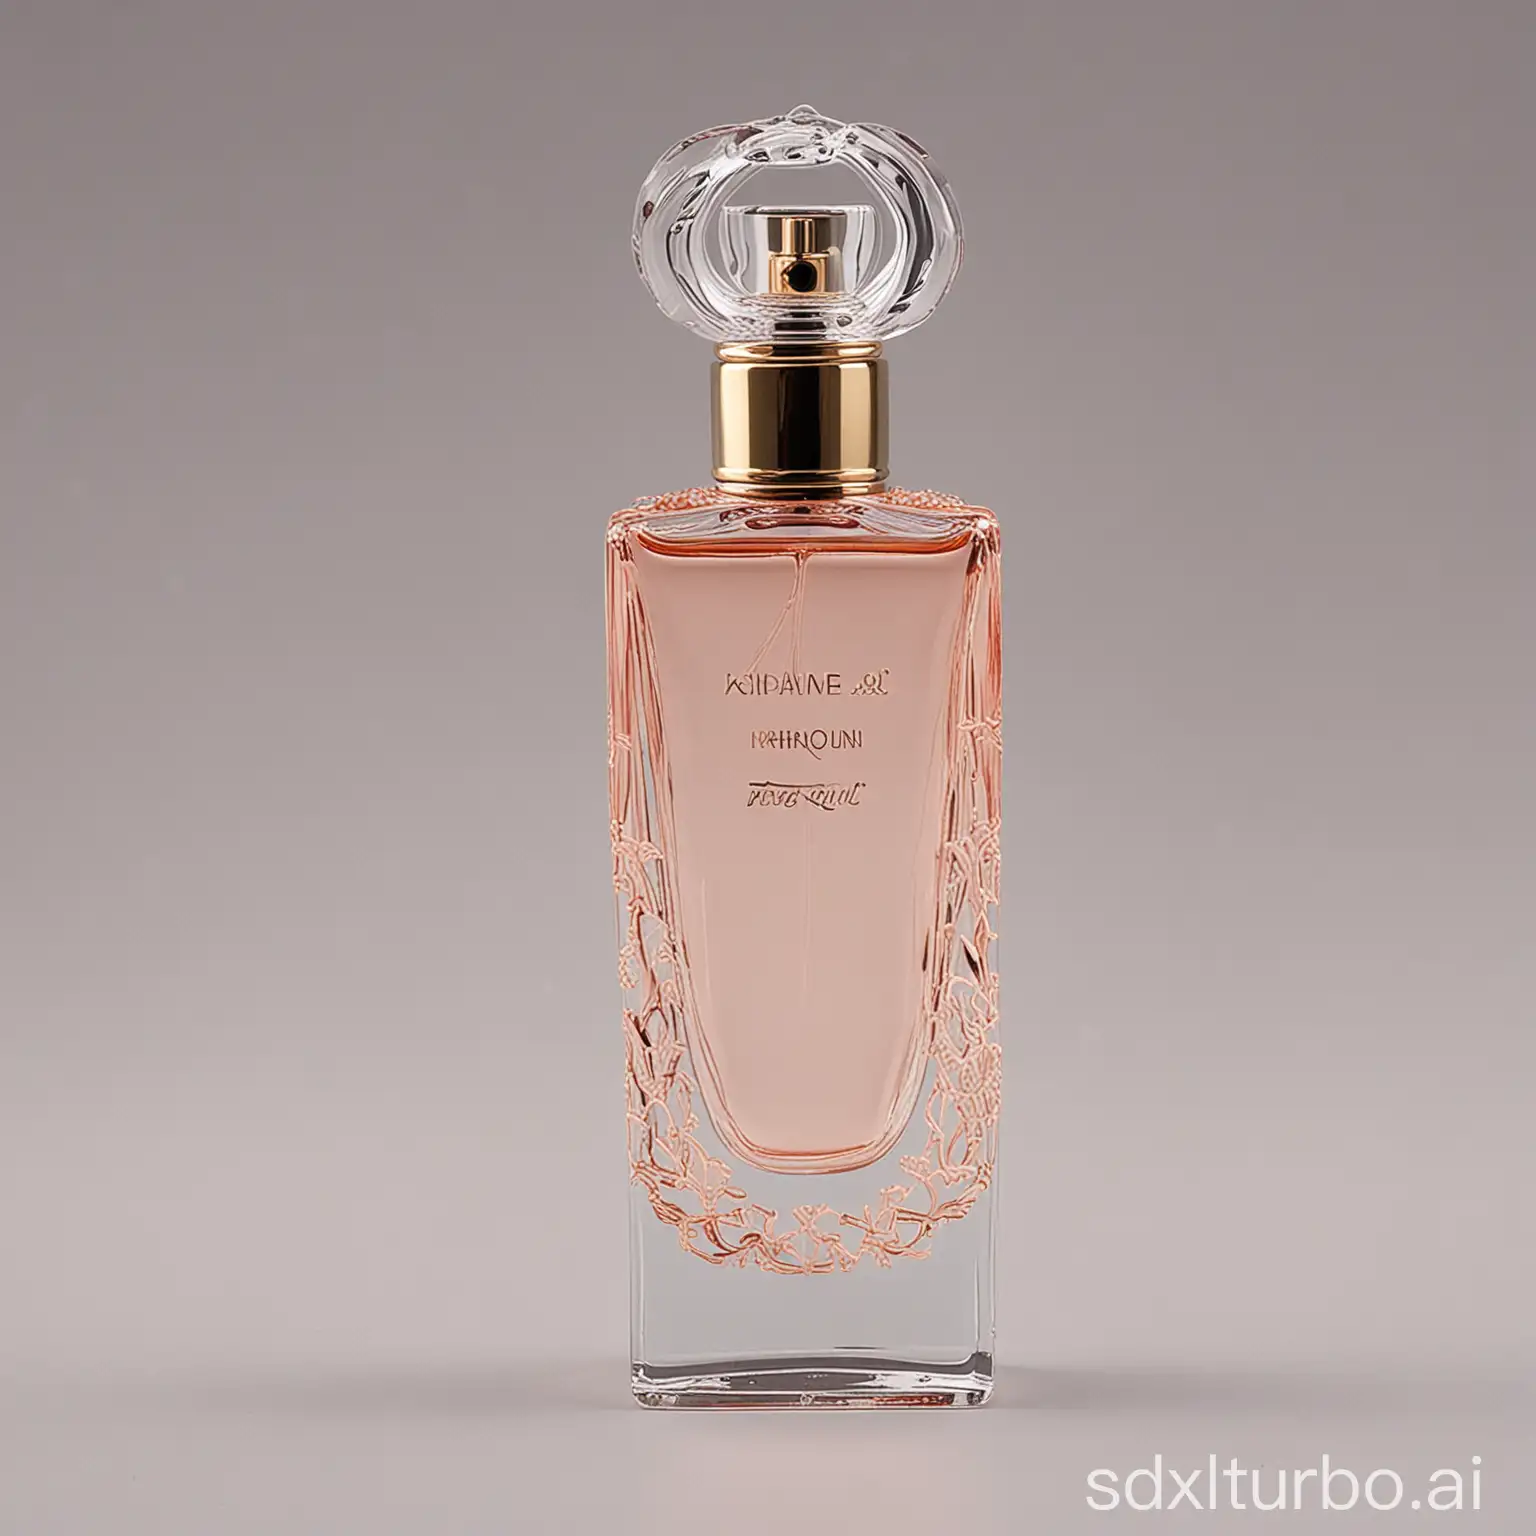 Lady perfume bottle packaging